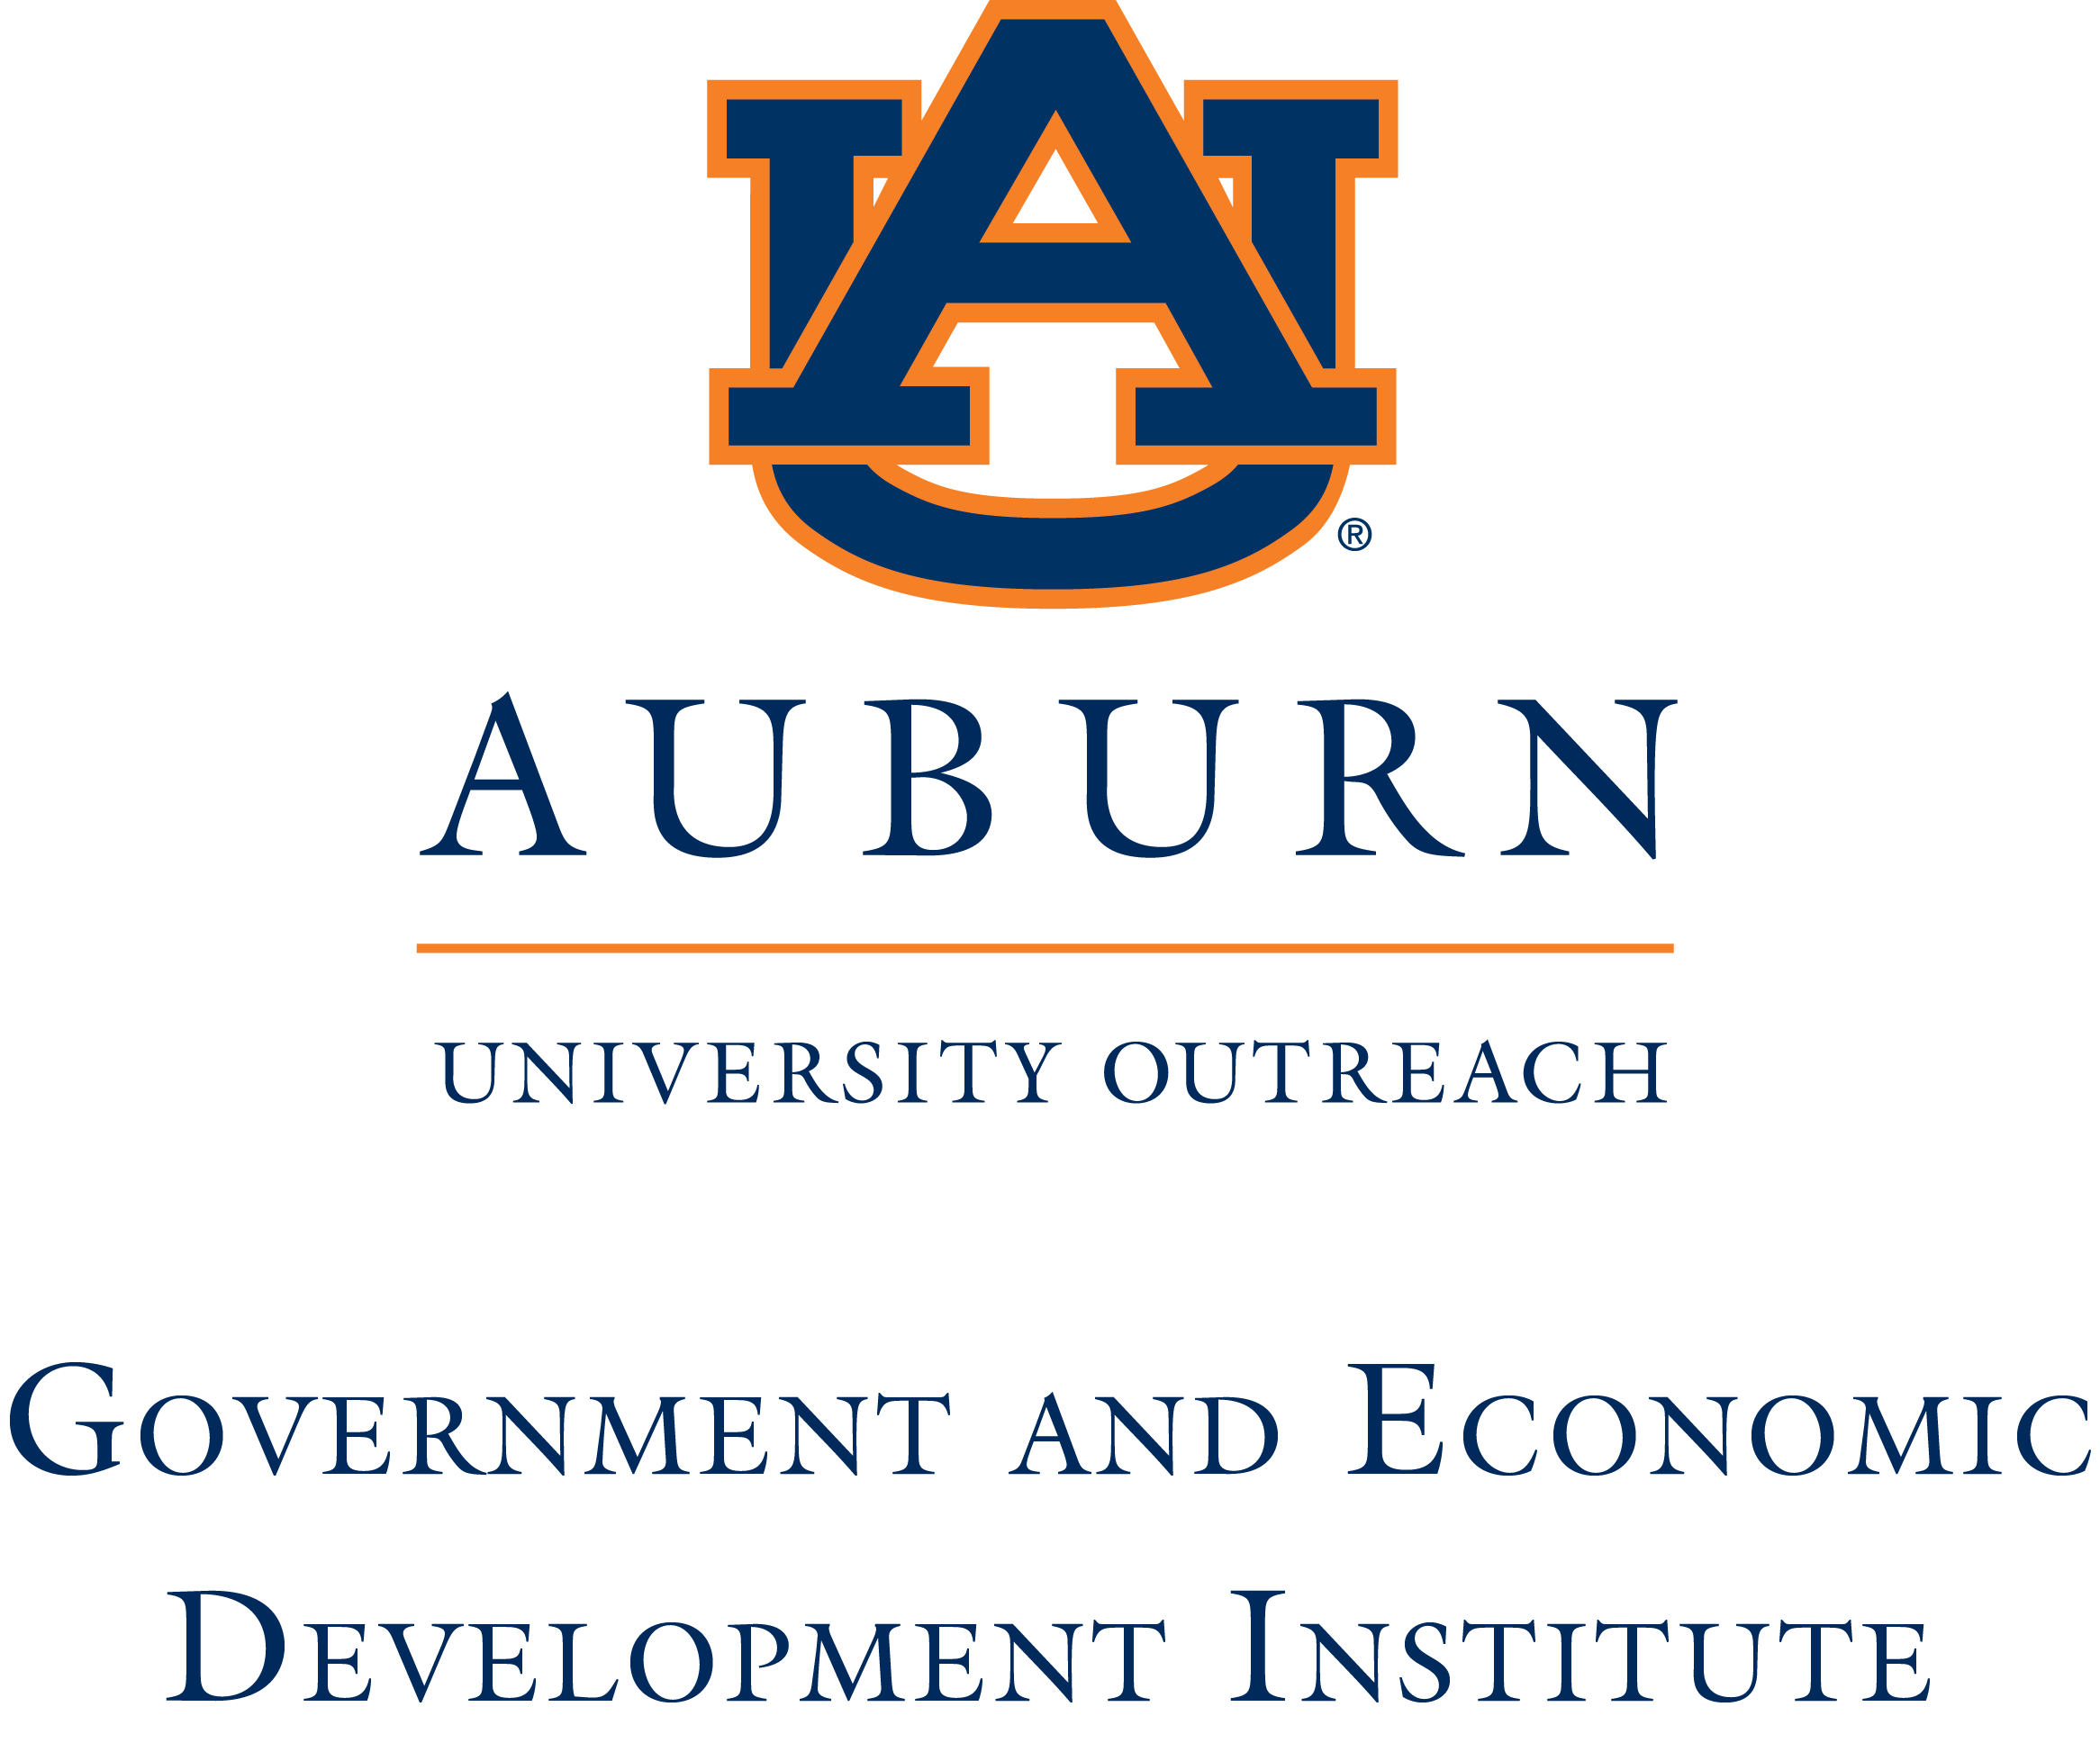 Auburn University; University Outreach; Government and Economic Development Institute